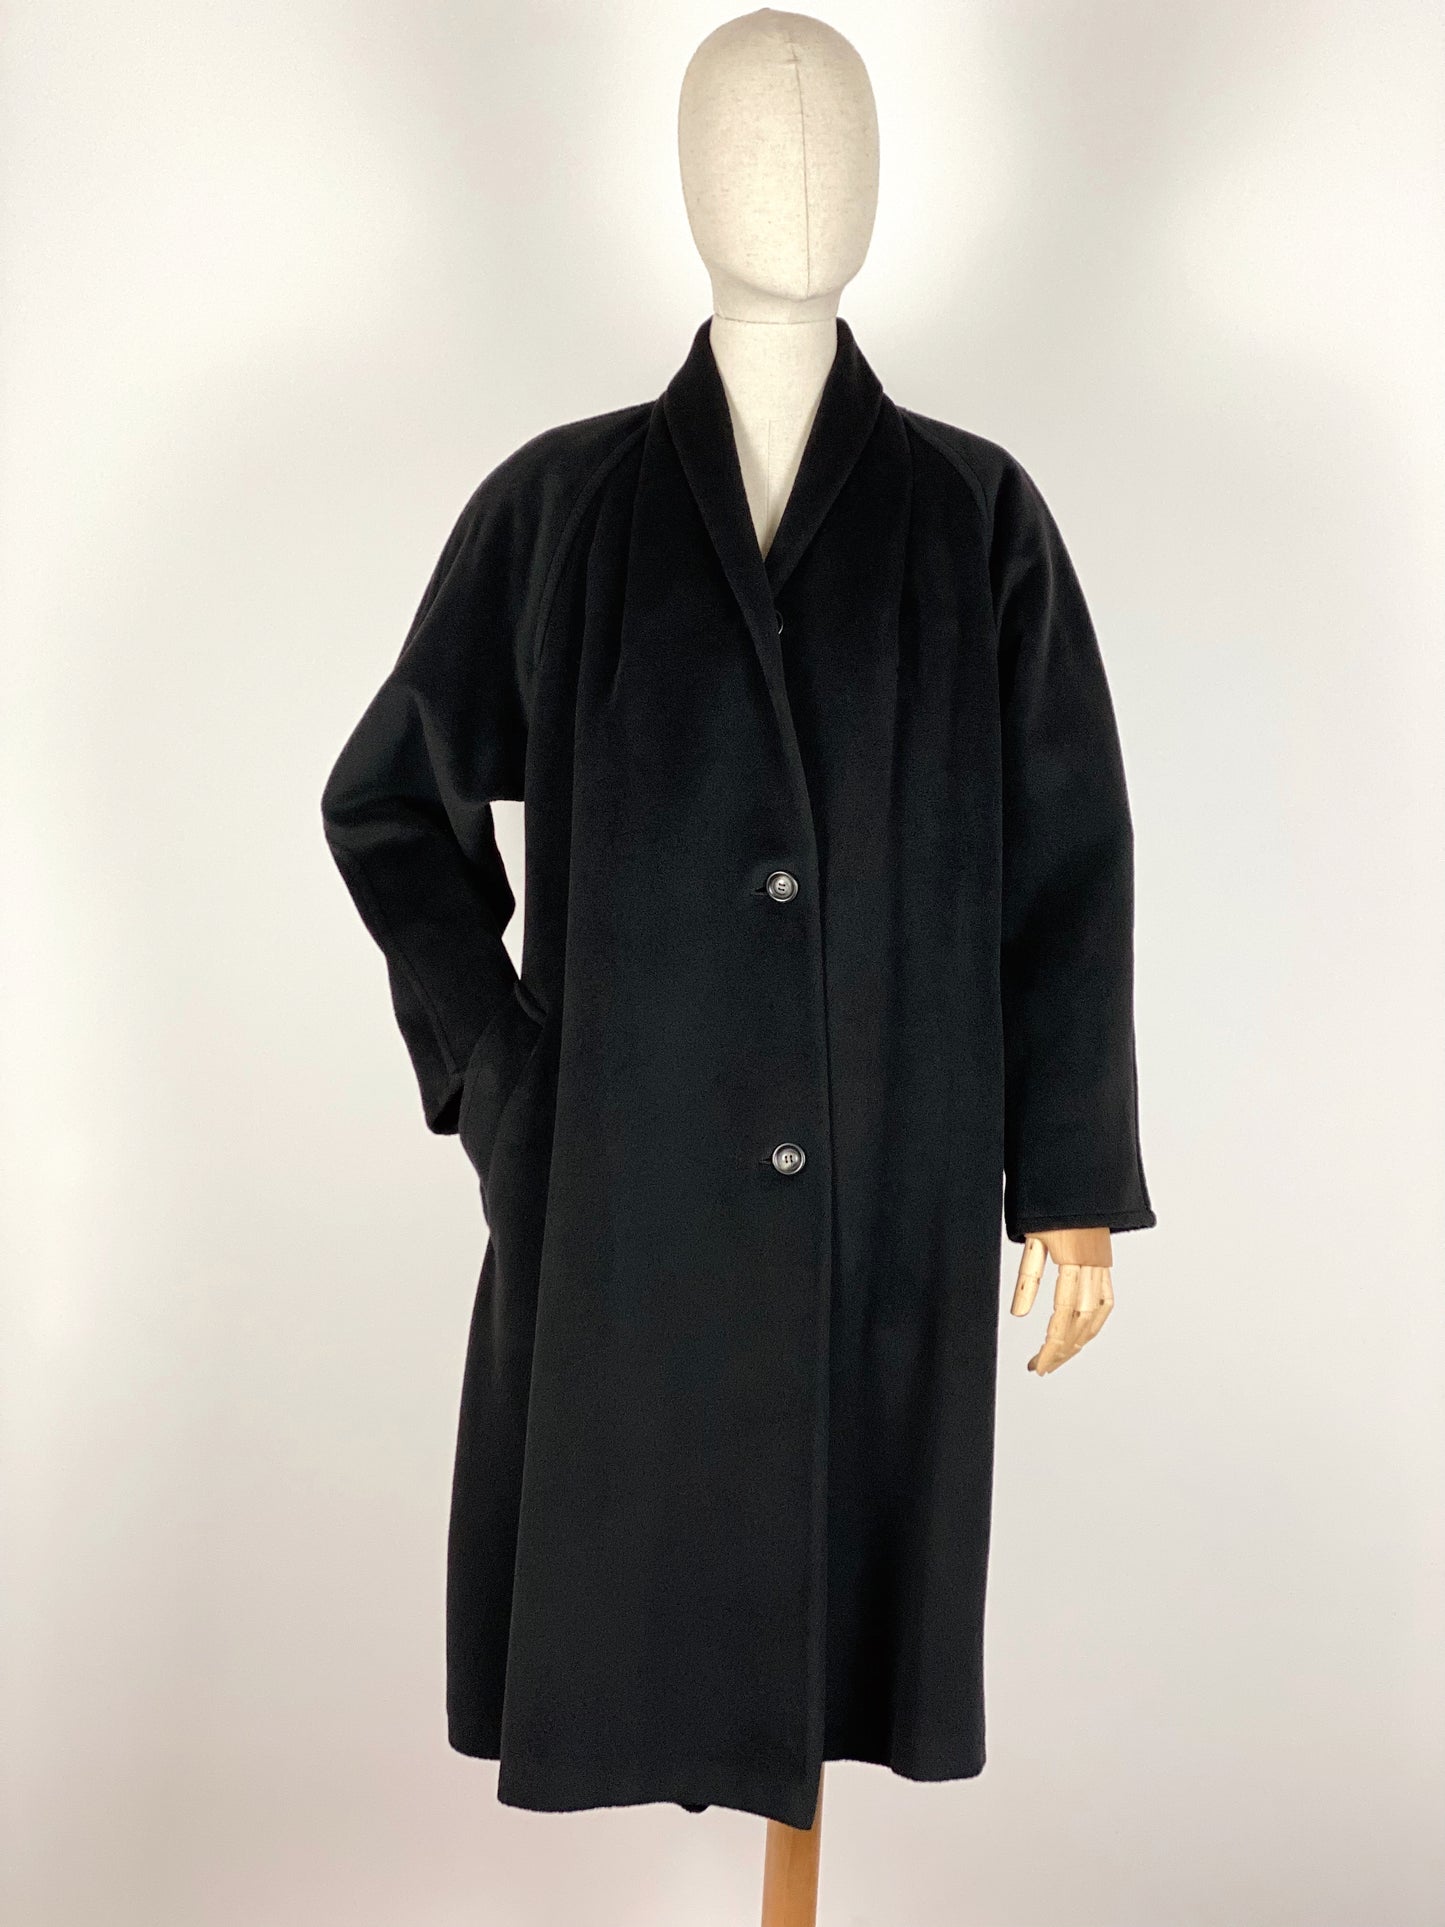 Vintage Black Coat by Max Mara